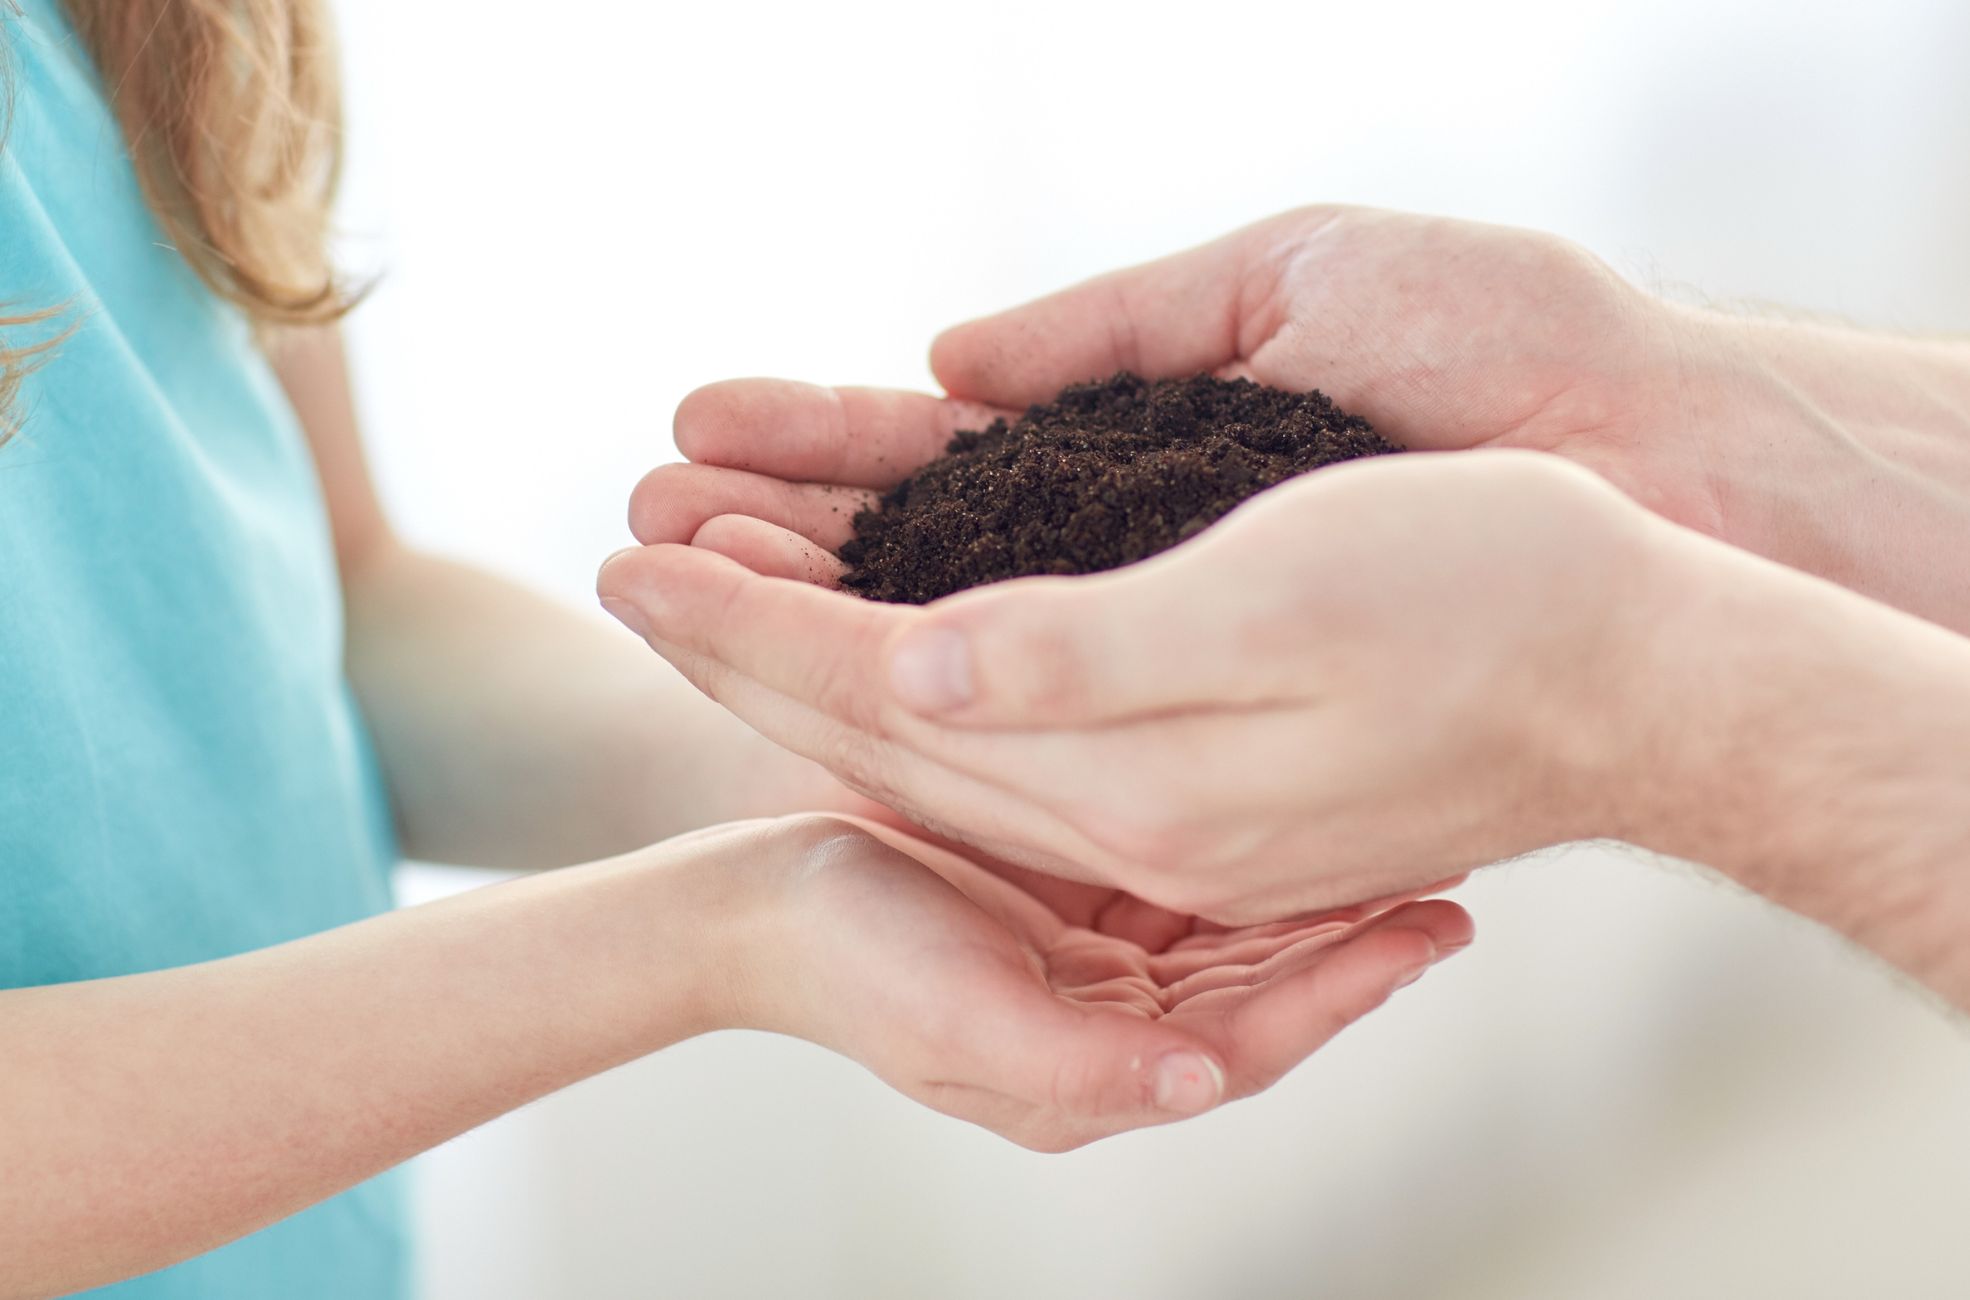 Hands Sharing Soil